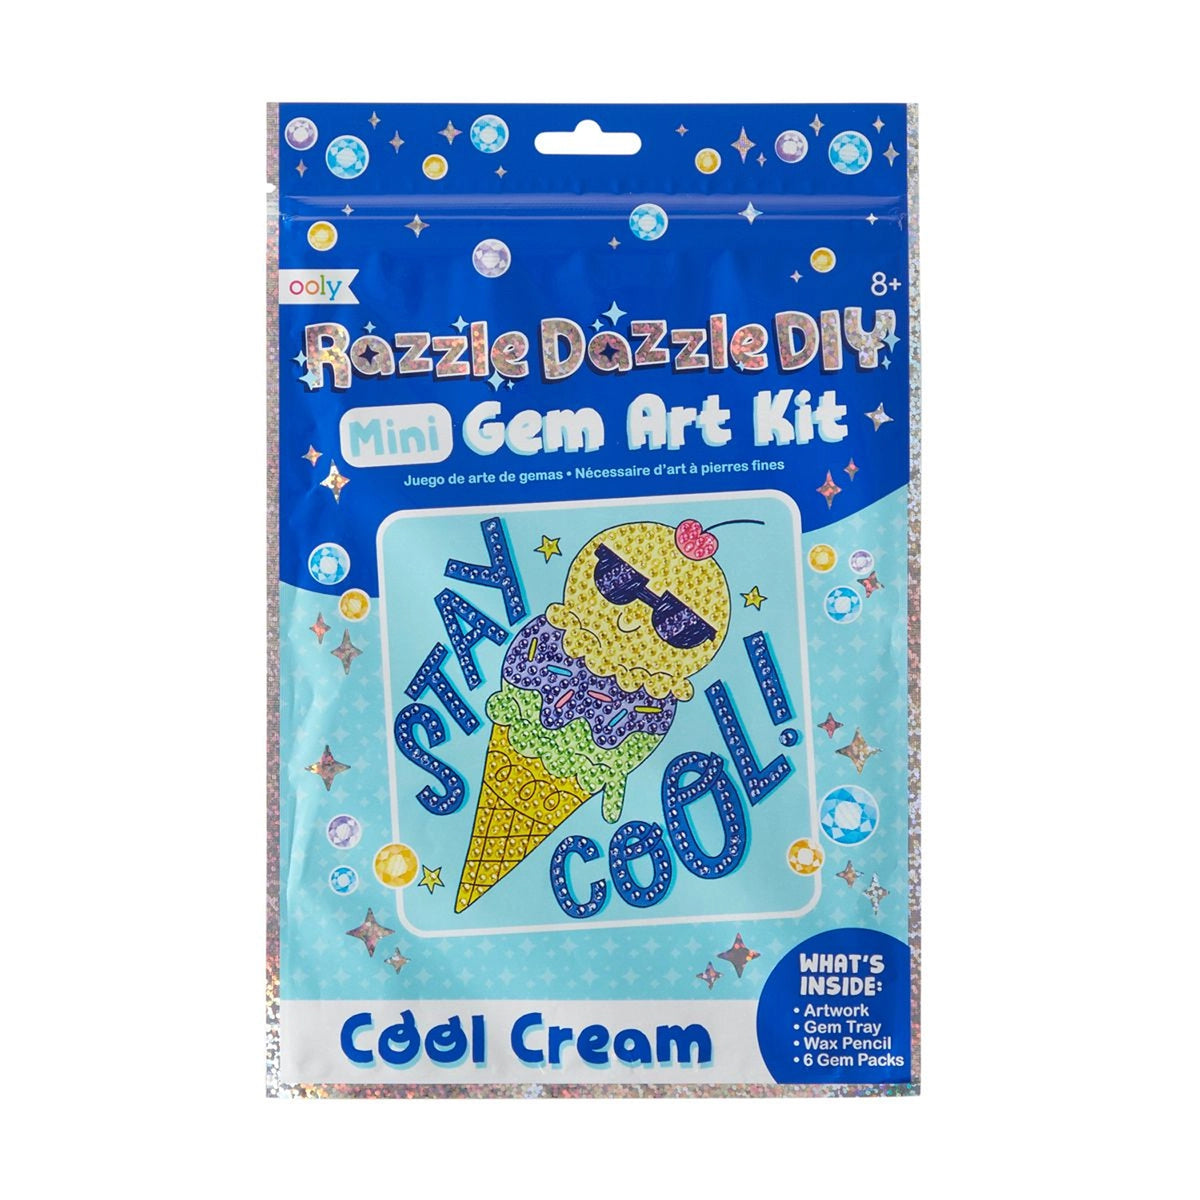 Razzle Dazzle D.I.Y. Mini Gem Art Kit: Cool Cream - FINAL SALE